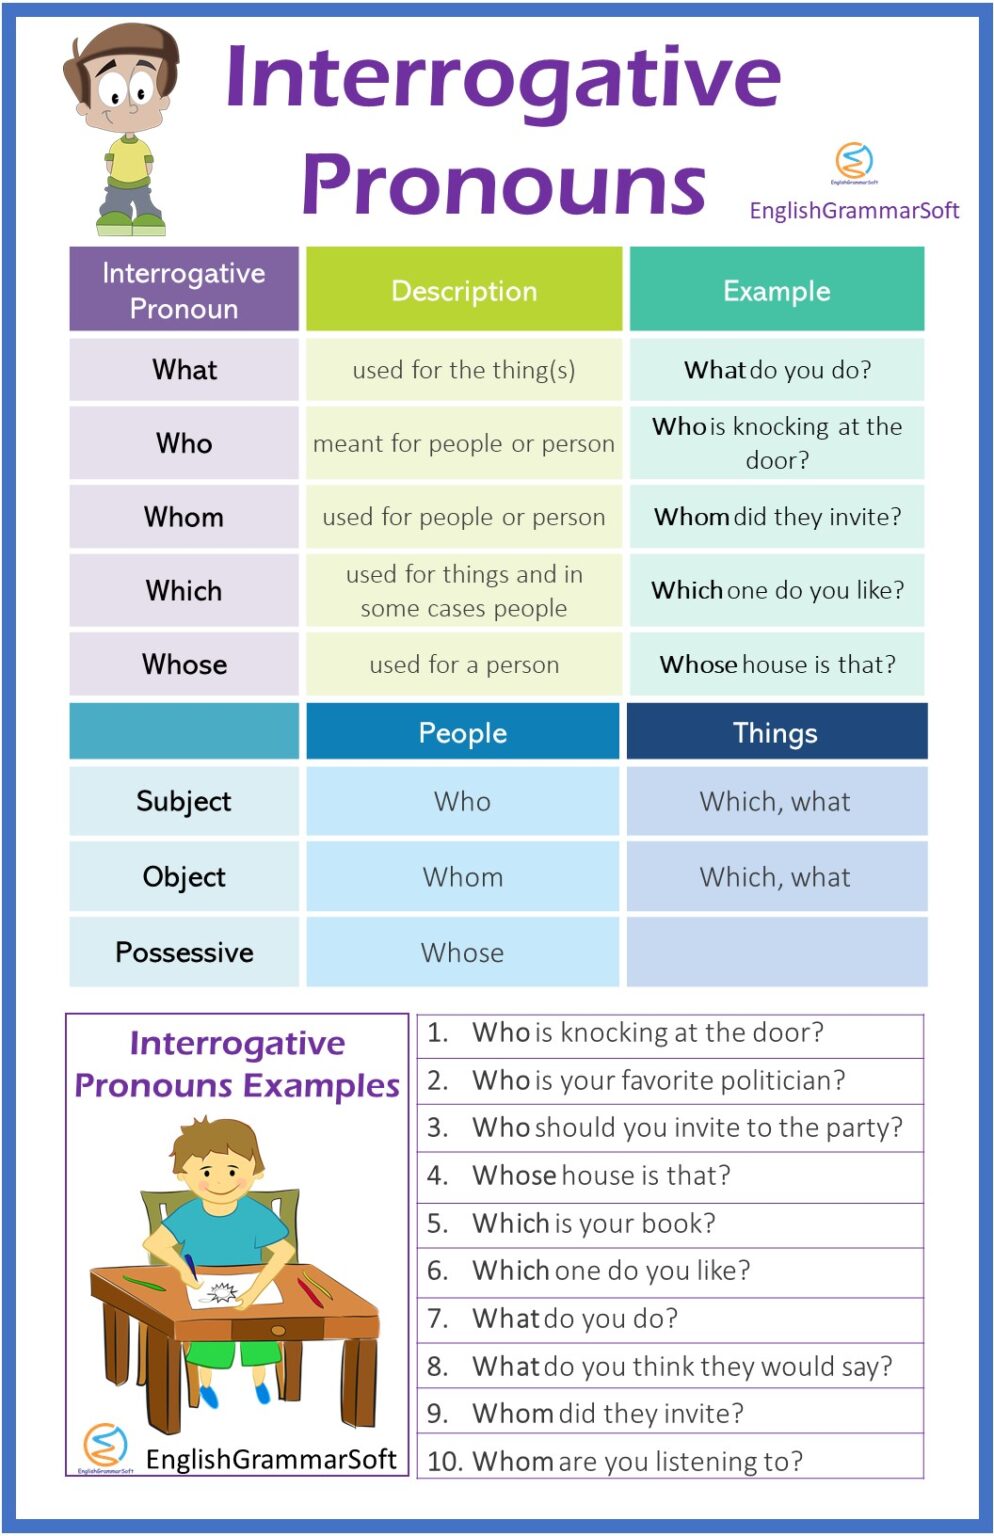 interrogative-pronouns-examples-and-chart-englishgrammarsoft